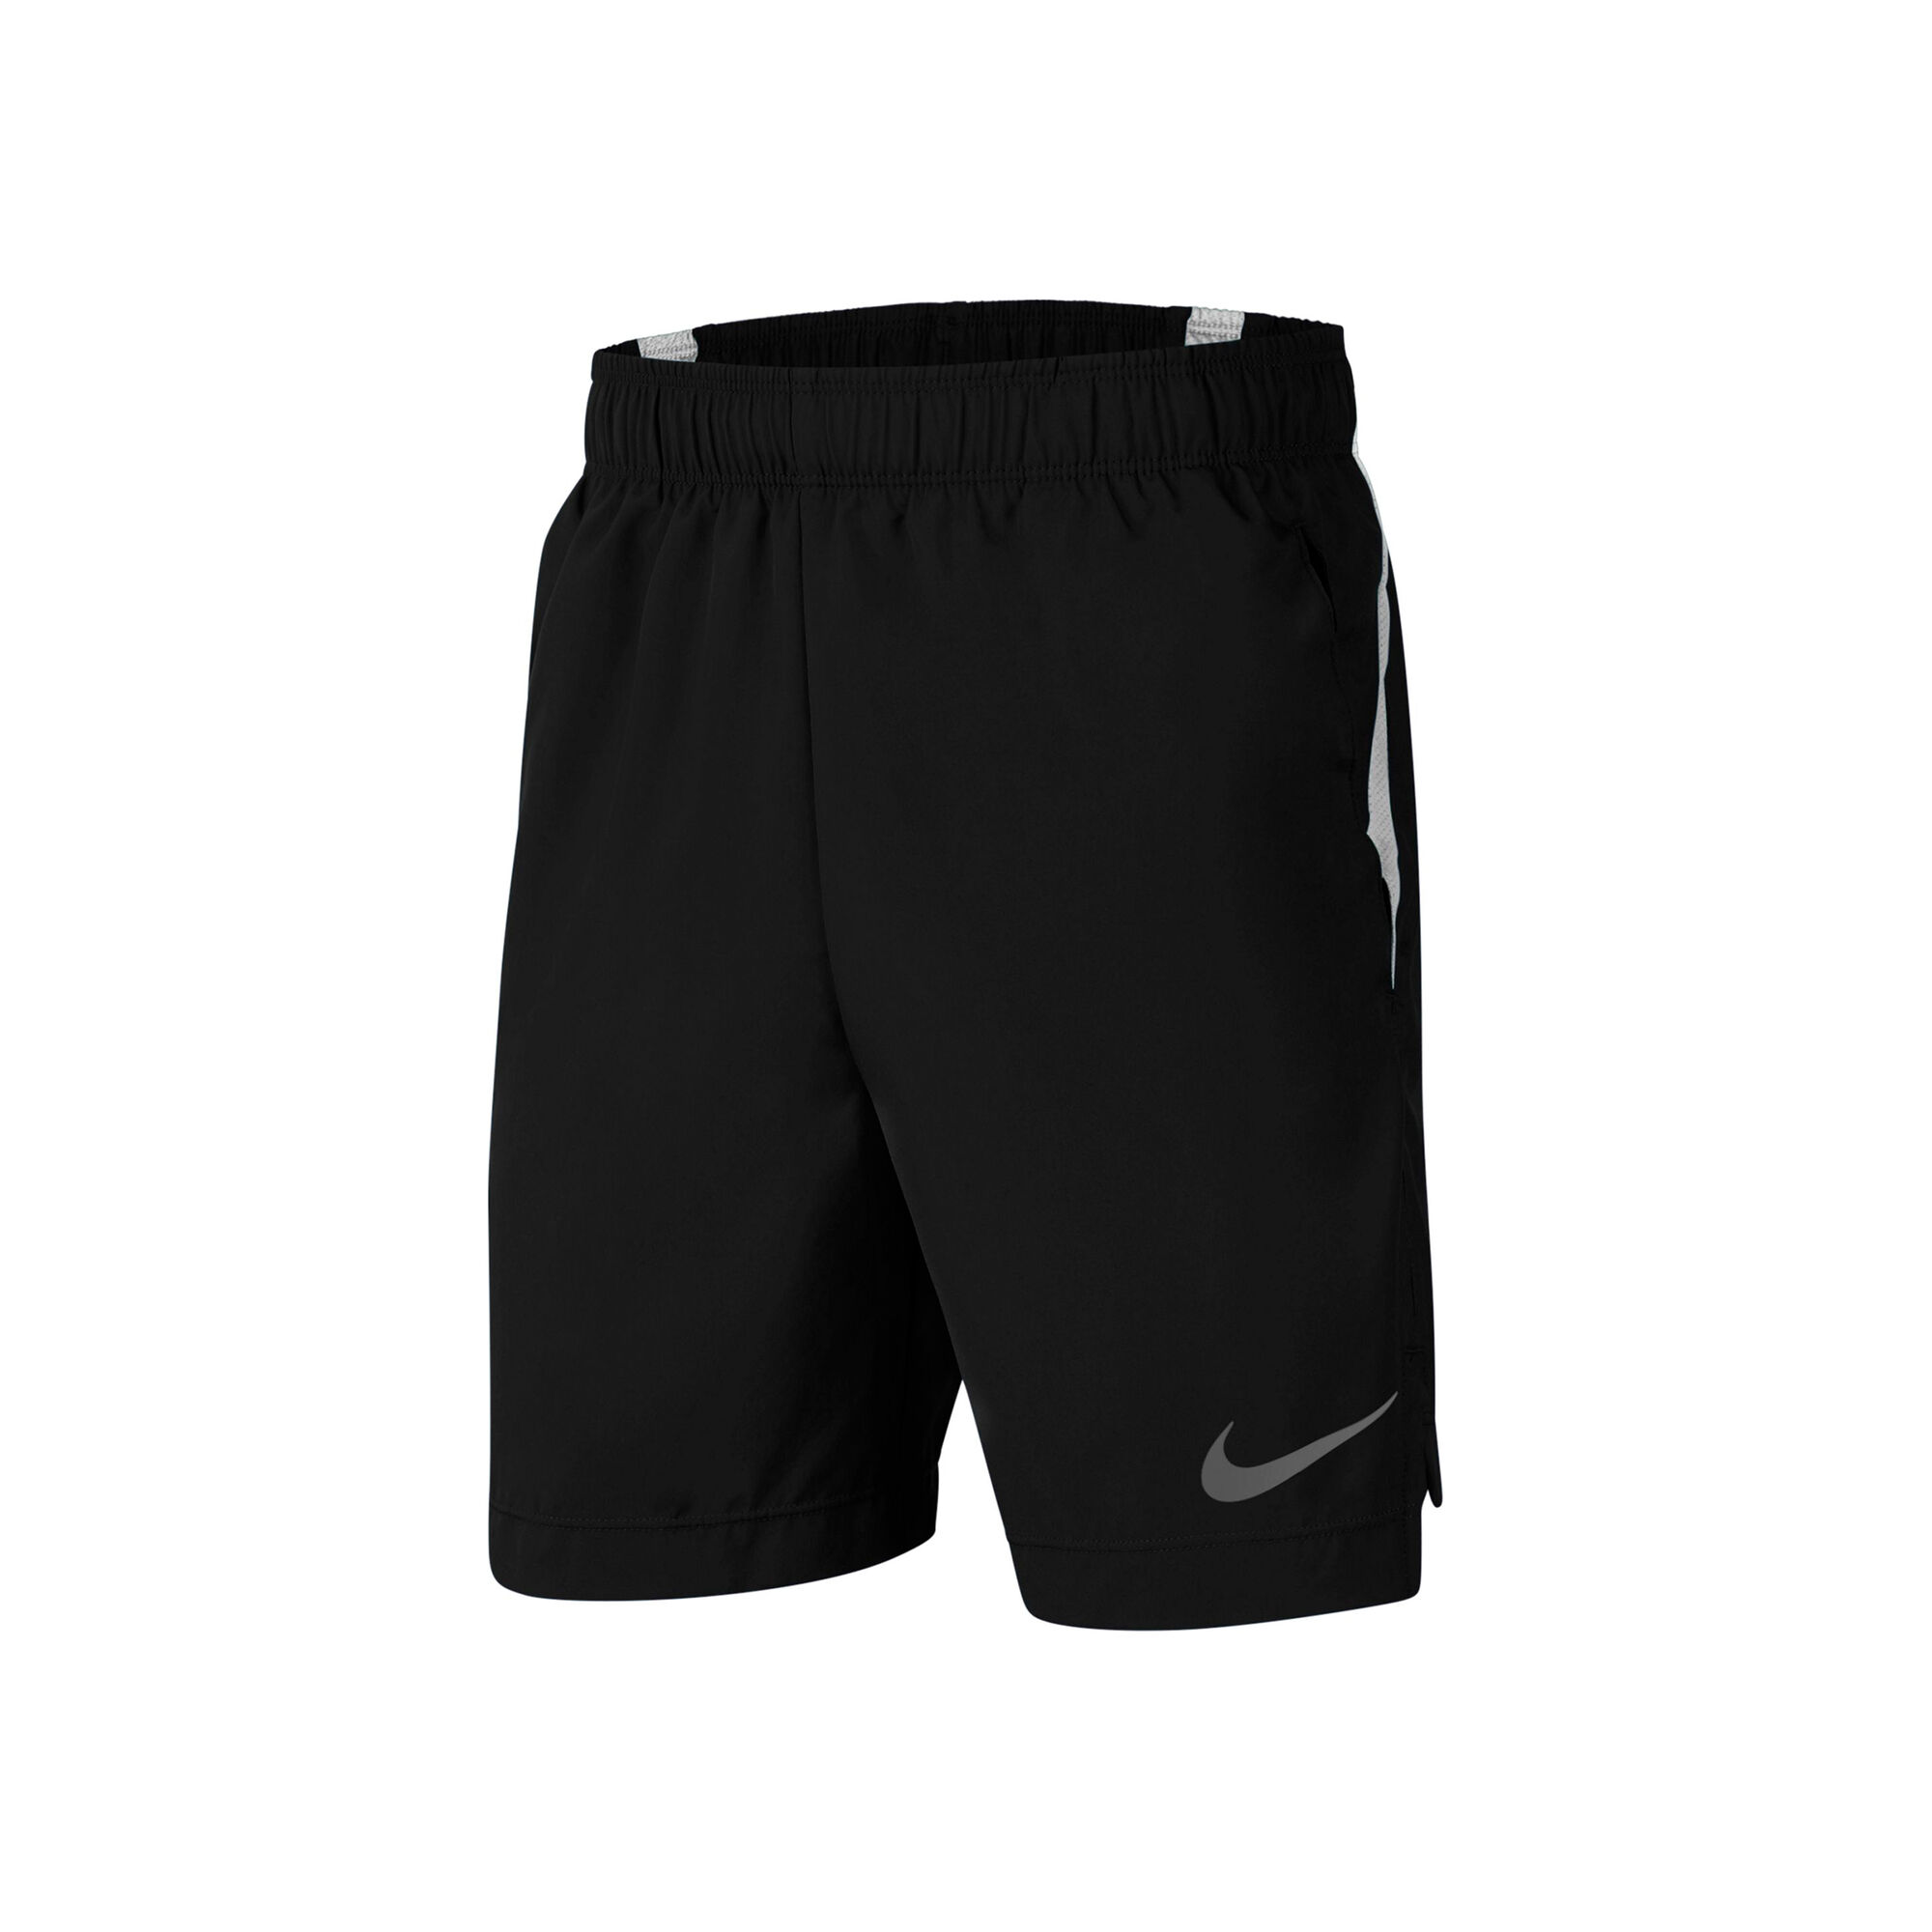 Buy Nike Shorts Boys Black, Silver online | Tennis Point UK